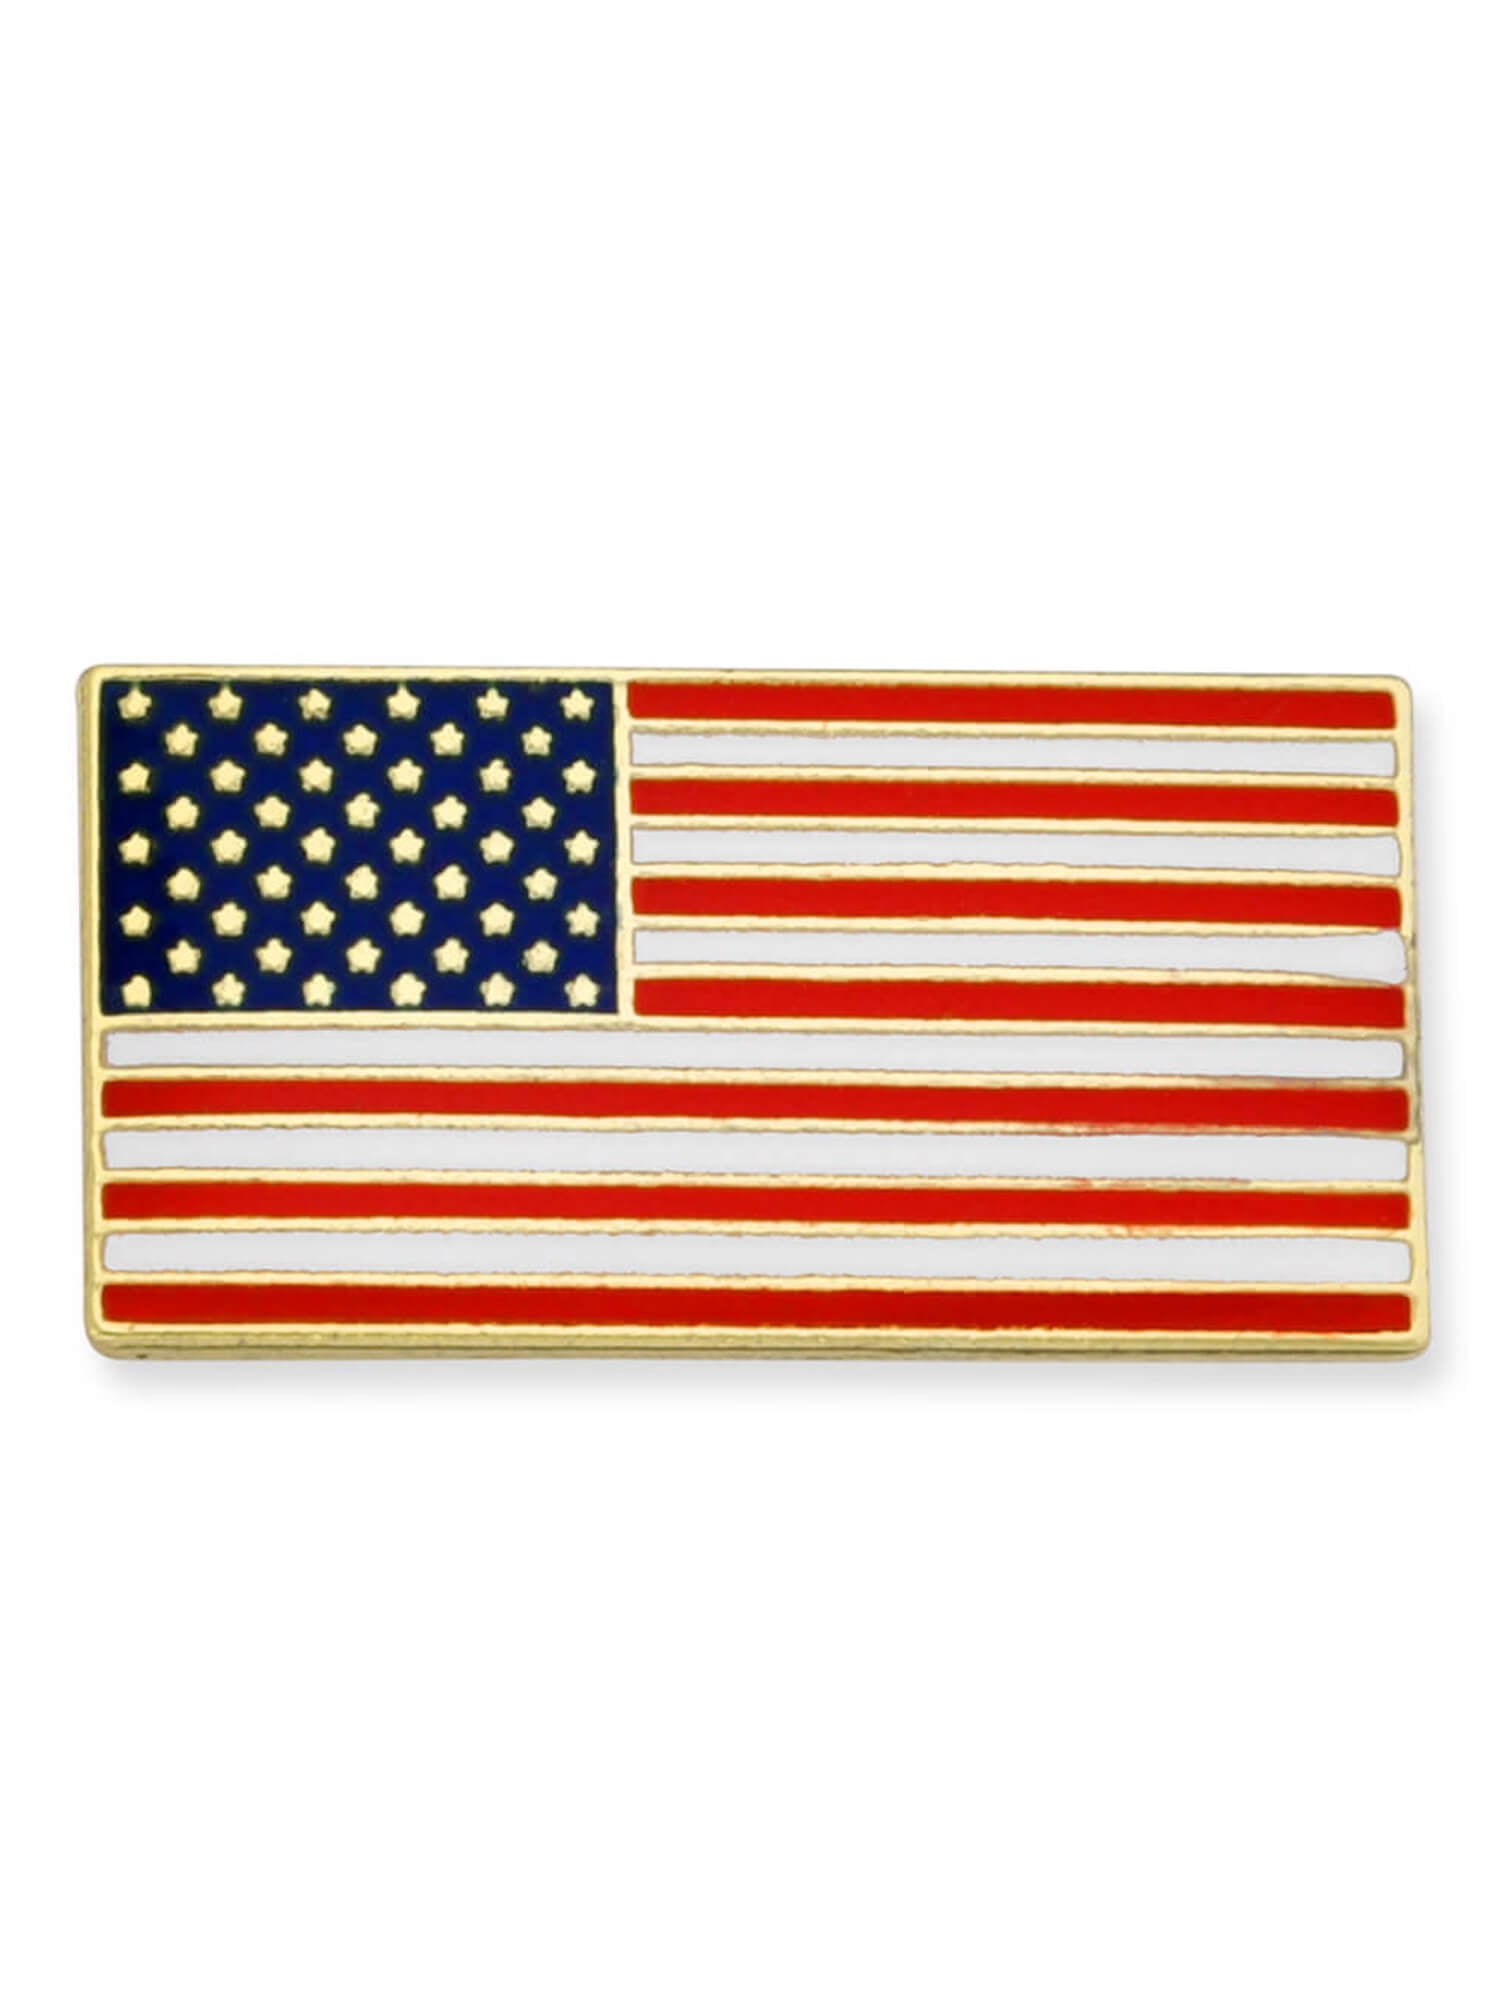 1 3/16" x 11/16" x 1/16" Lot of 5 HIGH QUALITY Silvertone US Flag Lapel Pins 